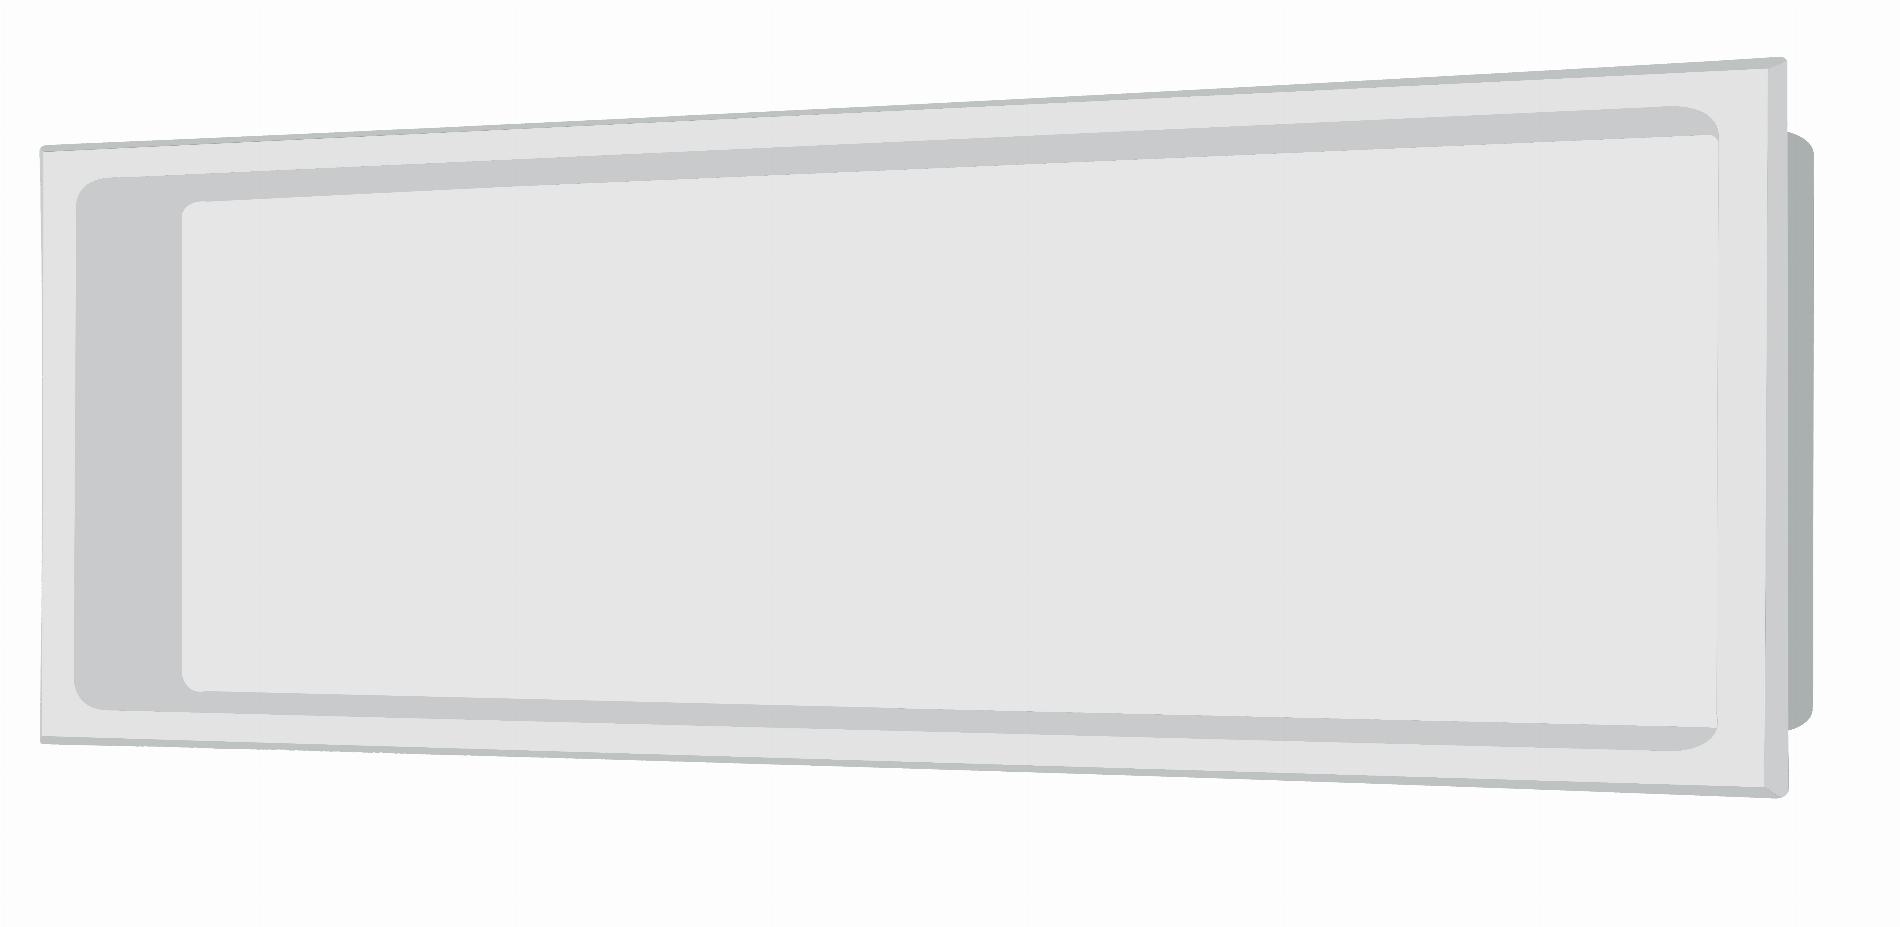 Edelstahl Wandnischen in 30 x 90 cm